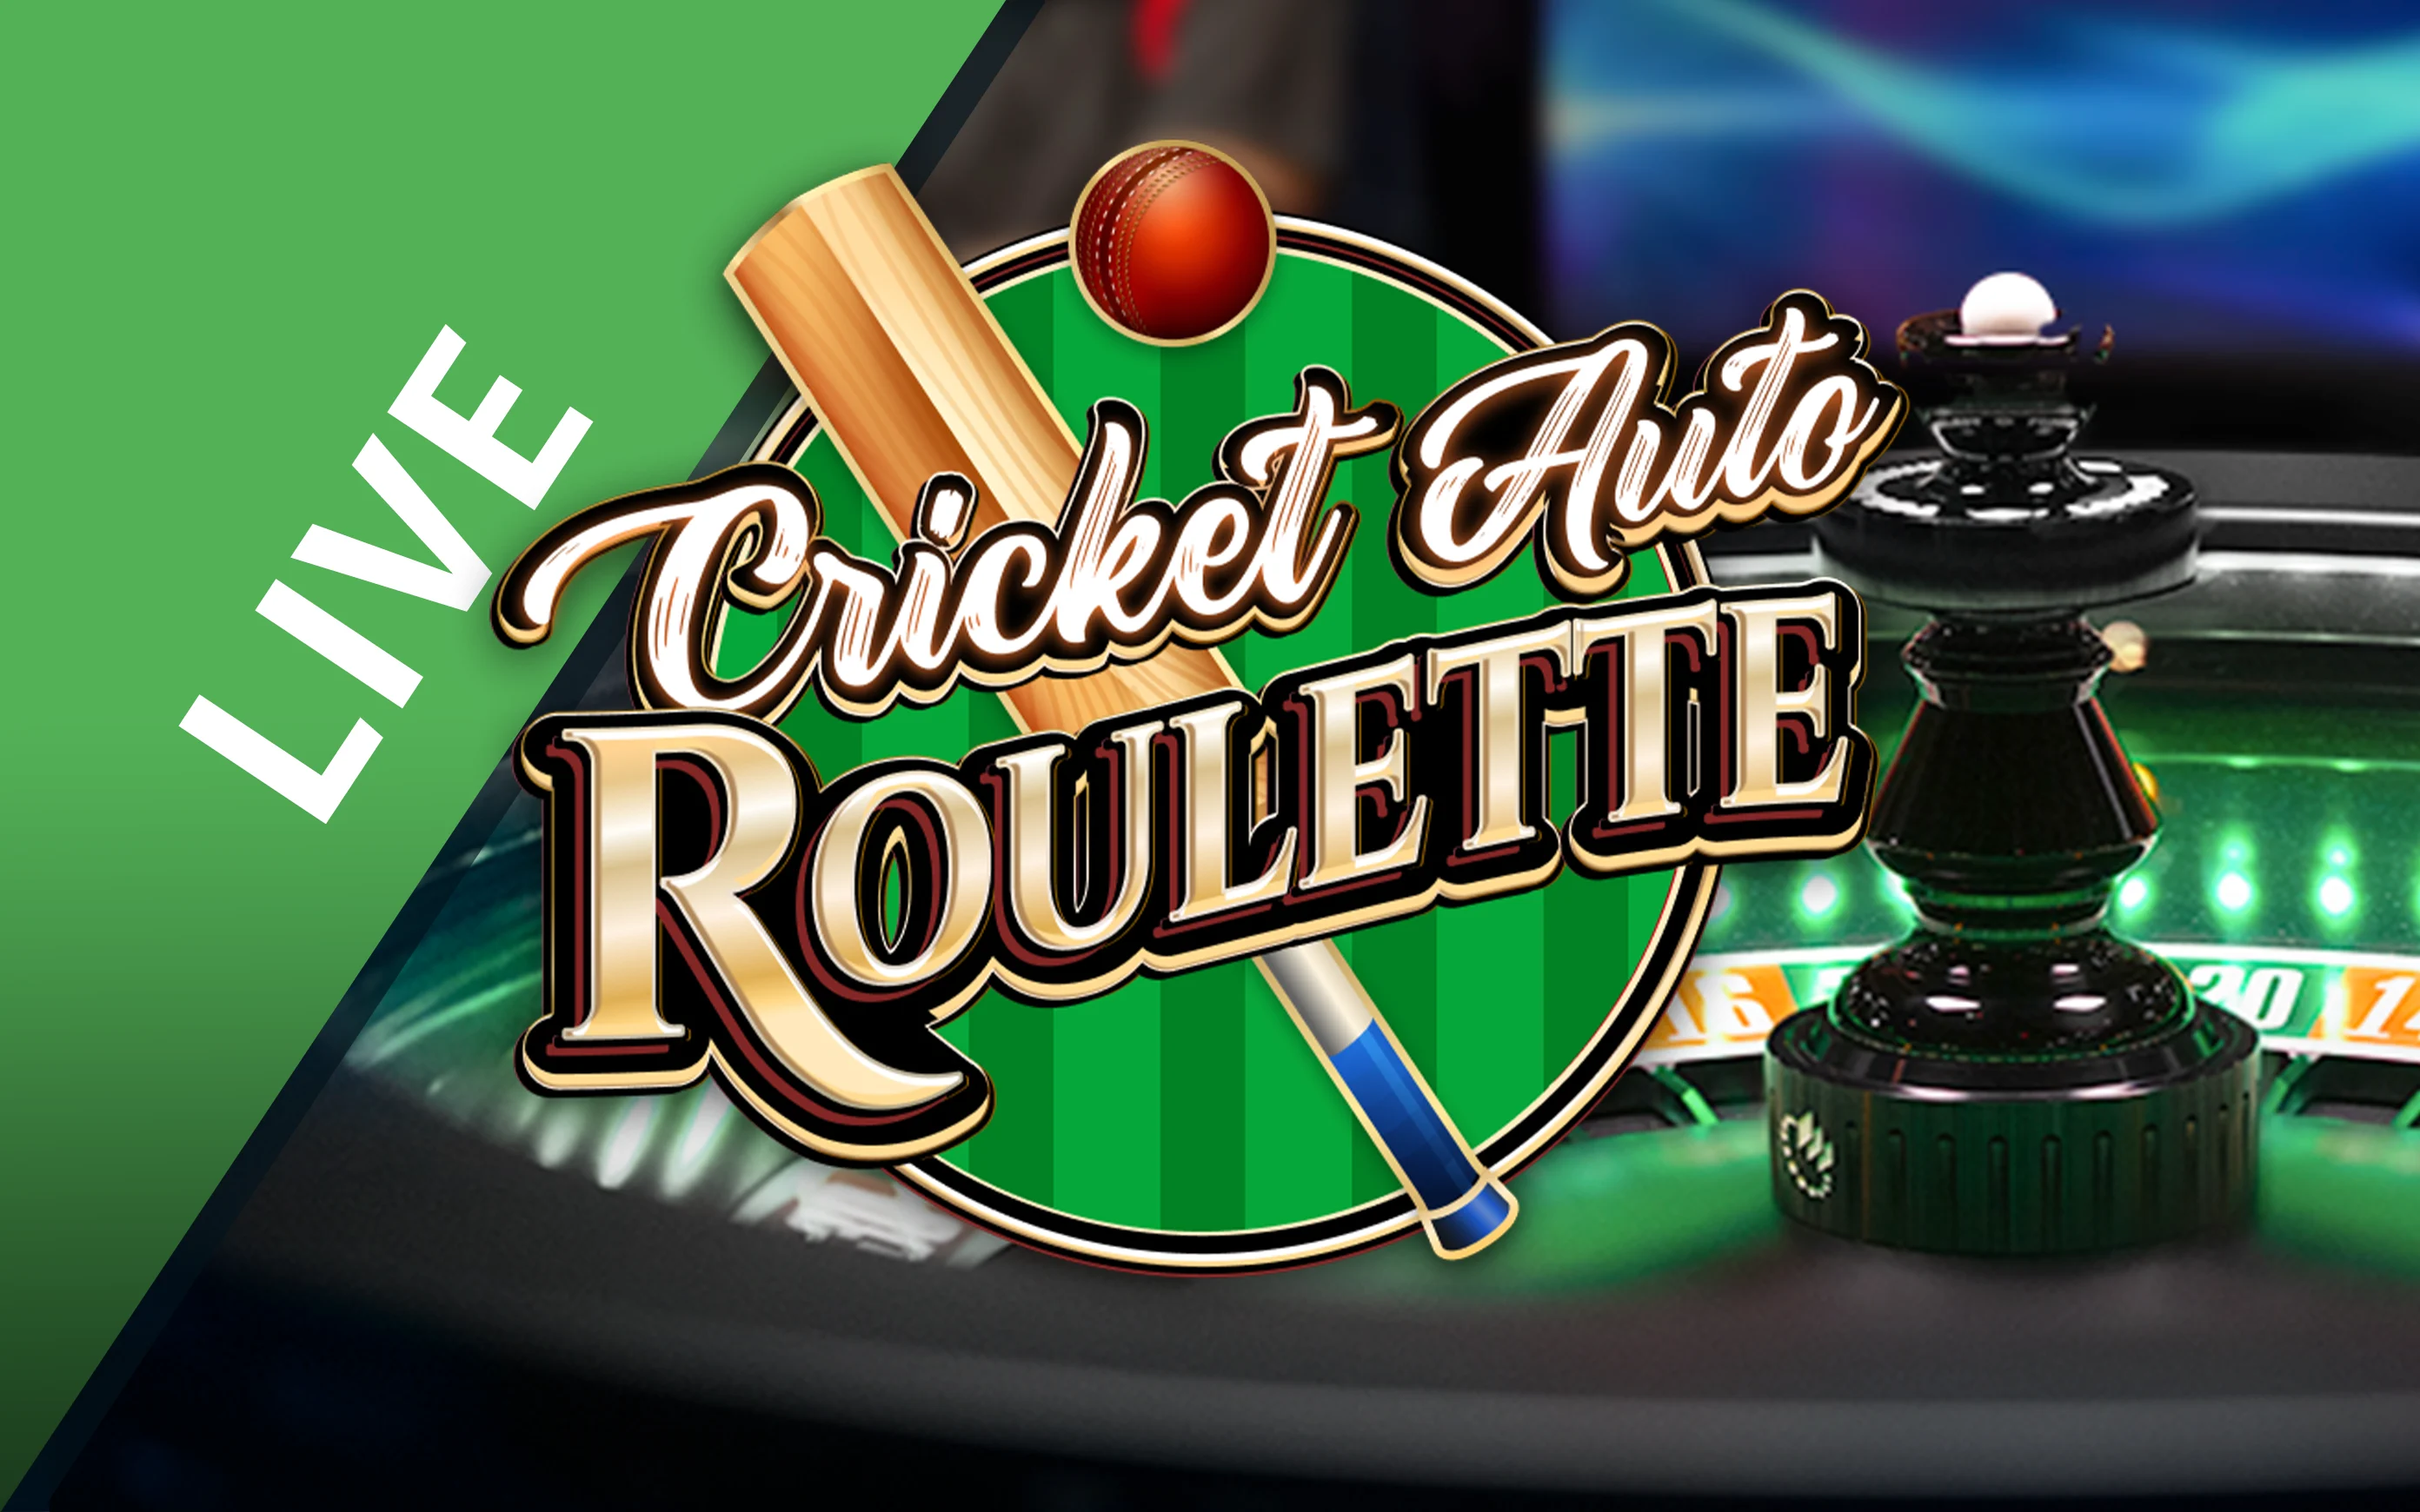 Jogue Cricket Auto Roulette no casino online Starcasino.be 